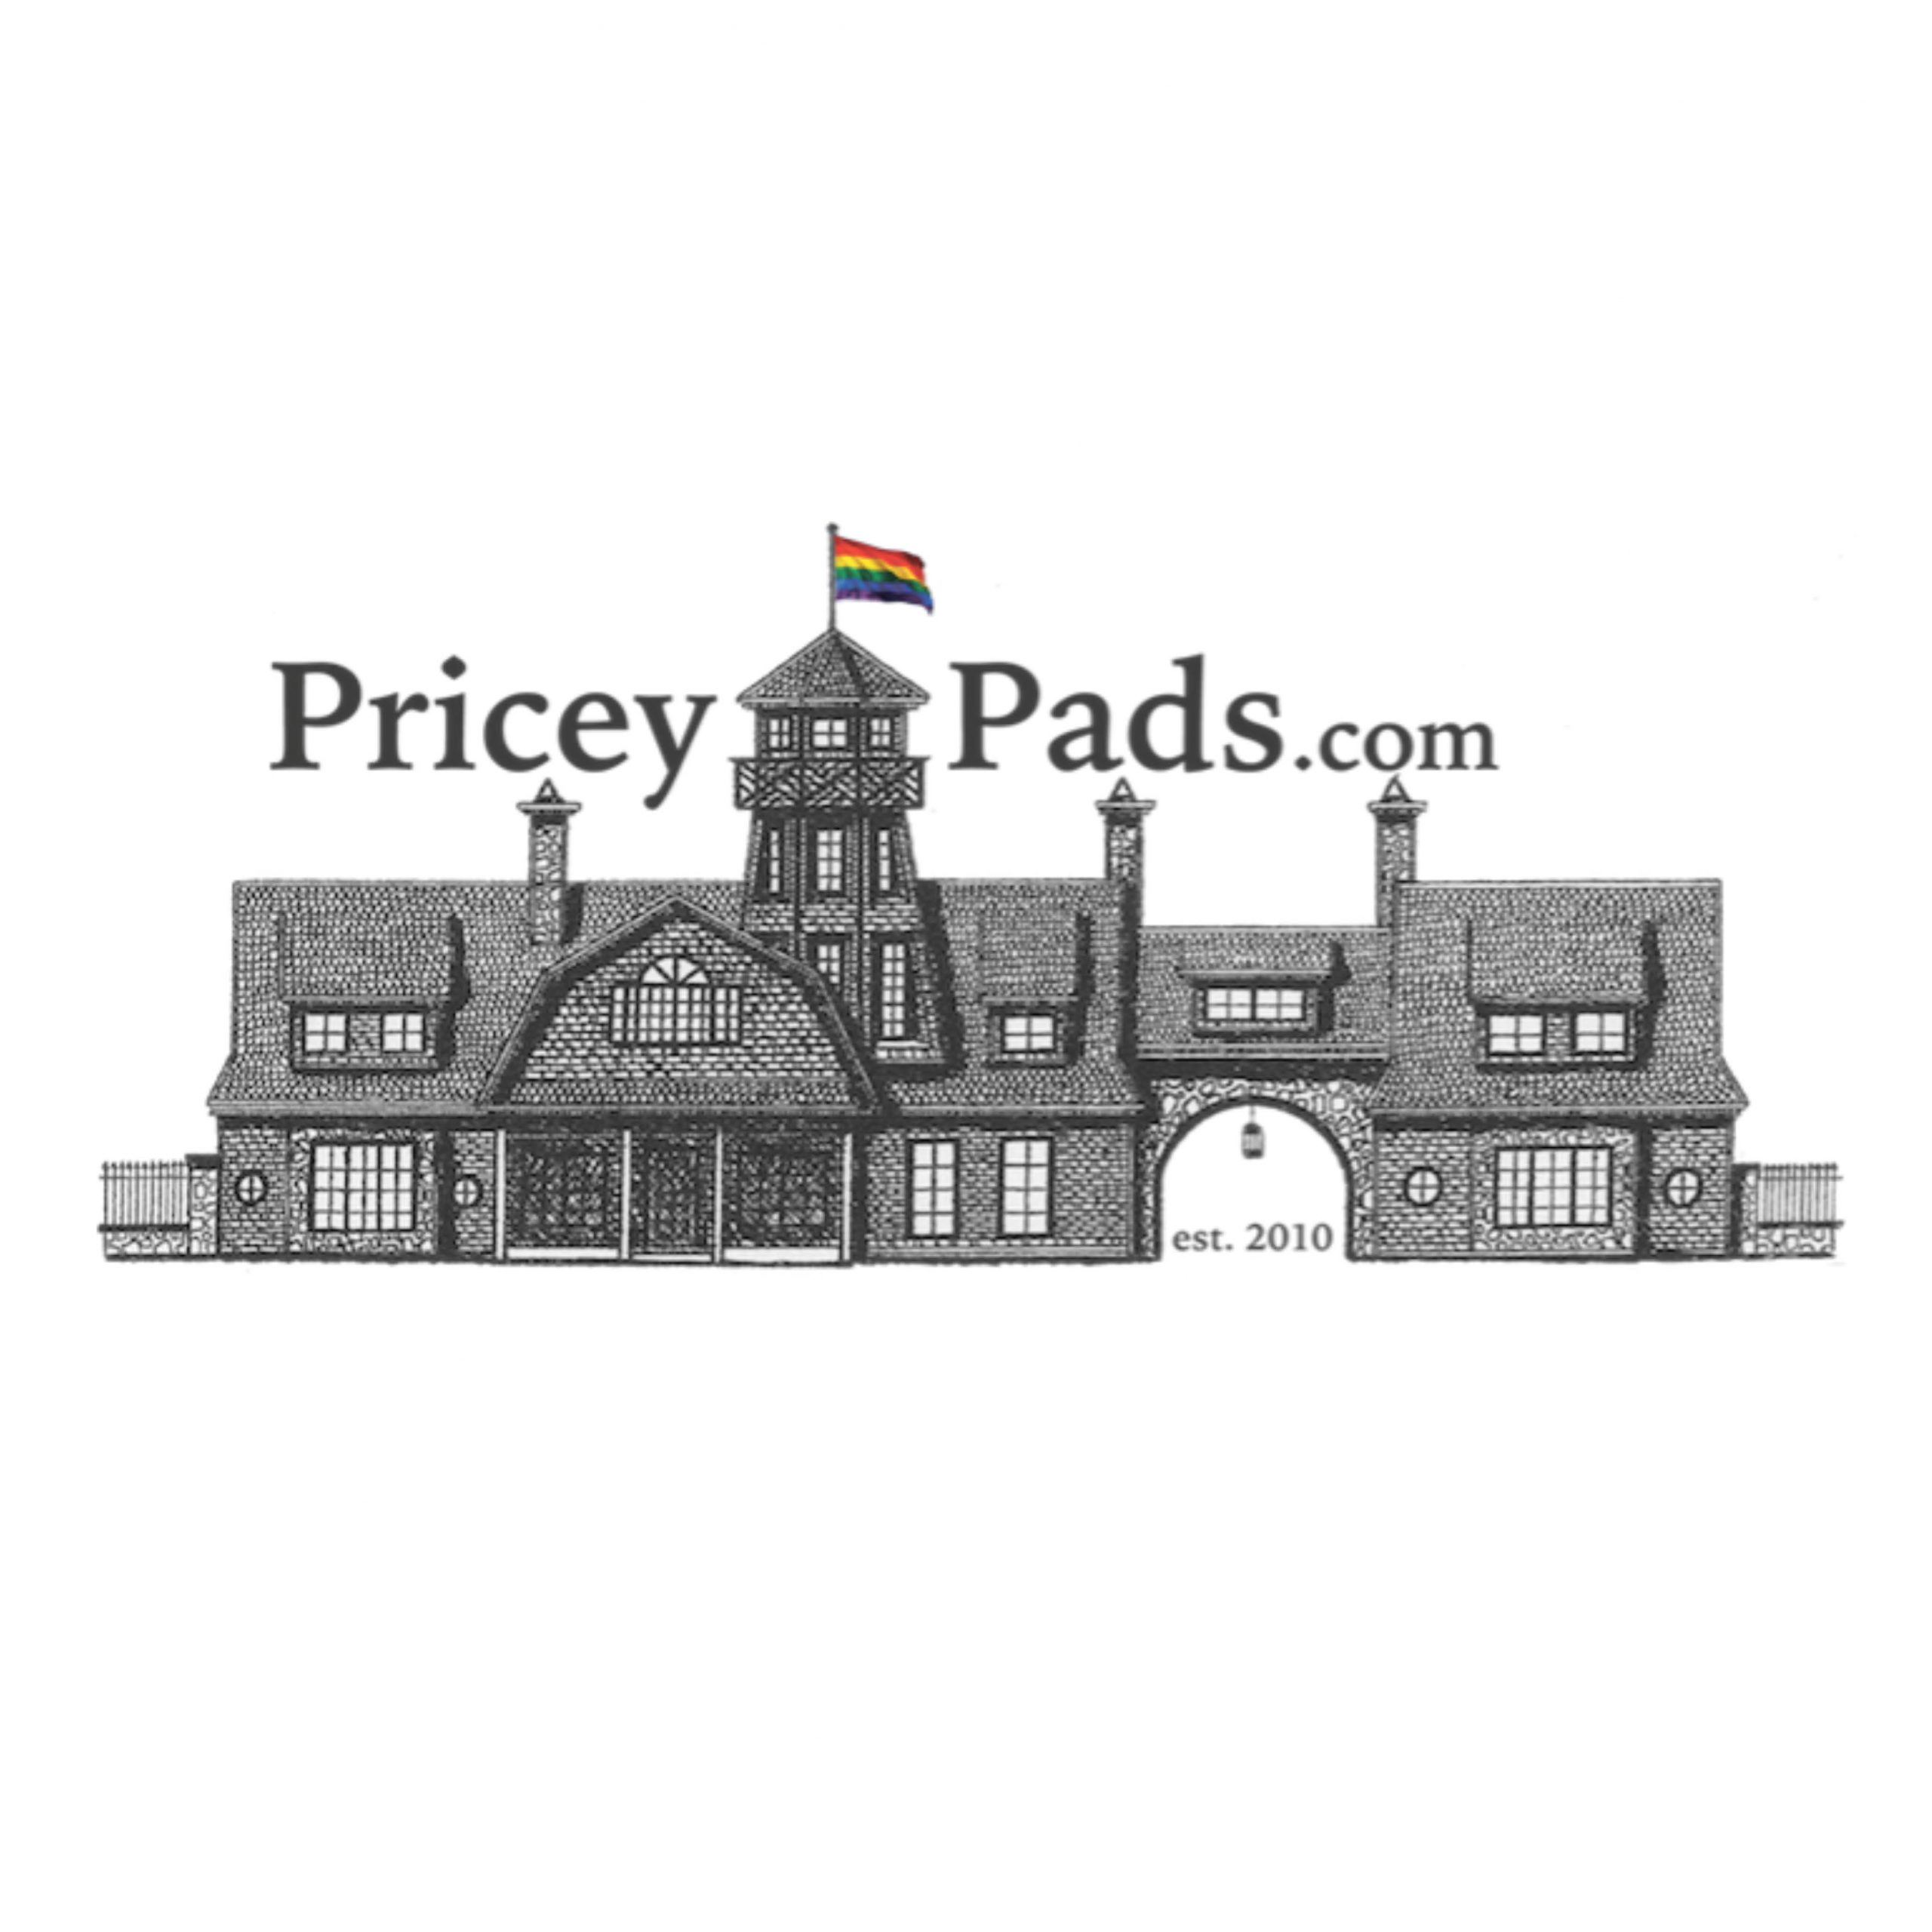 Pricey Pads.com